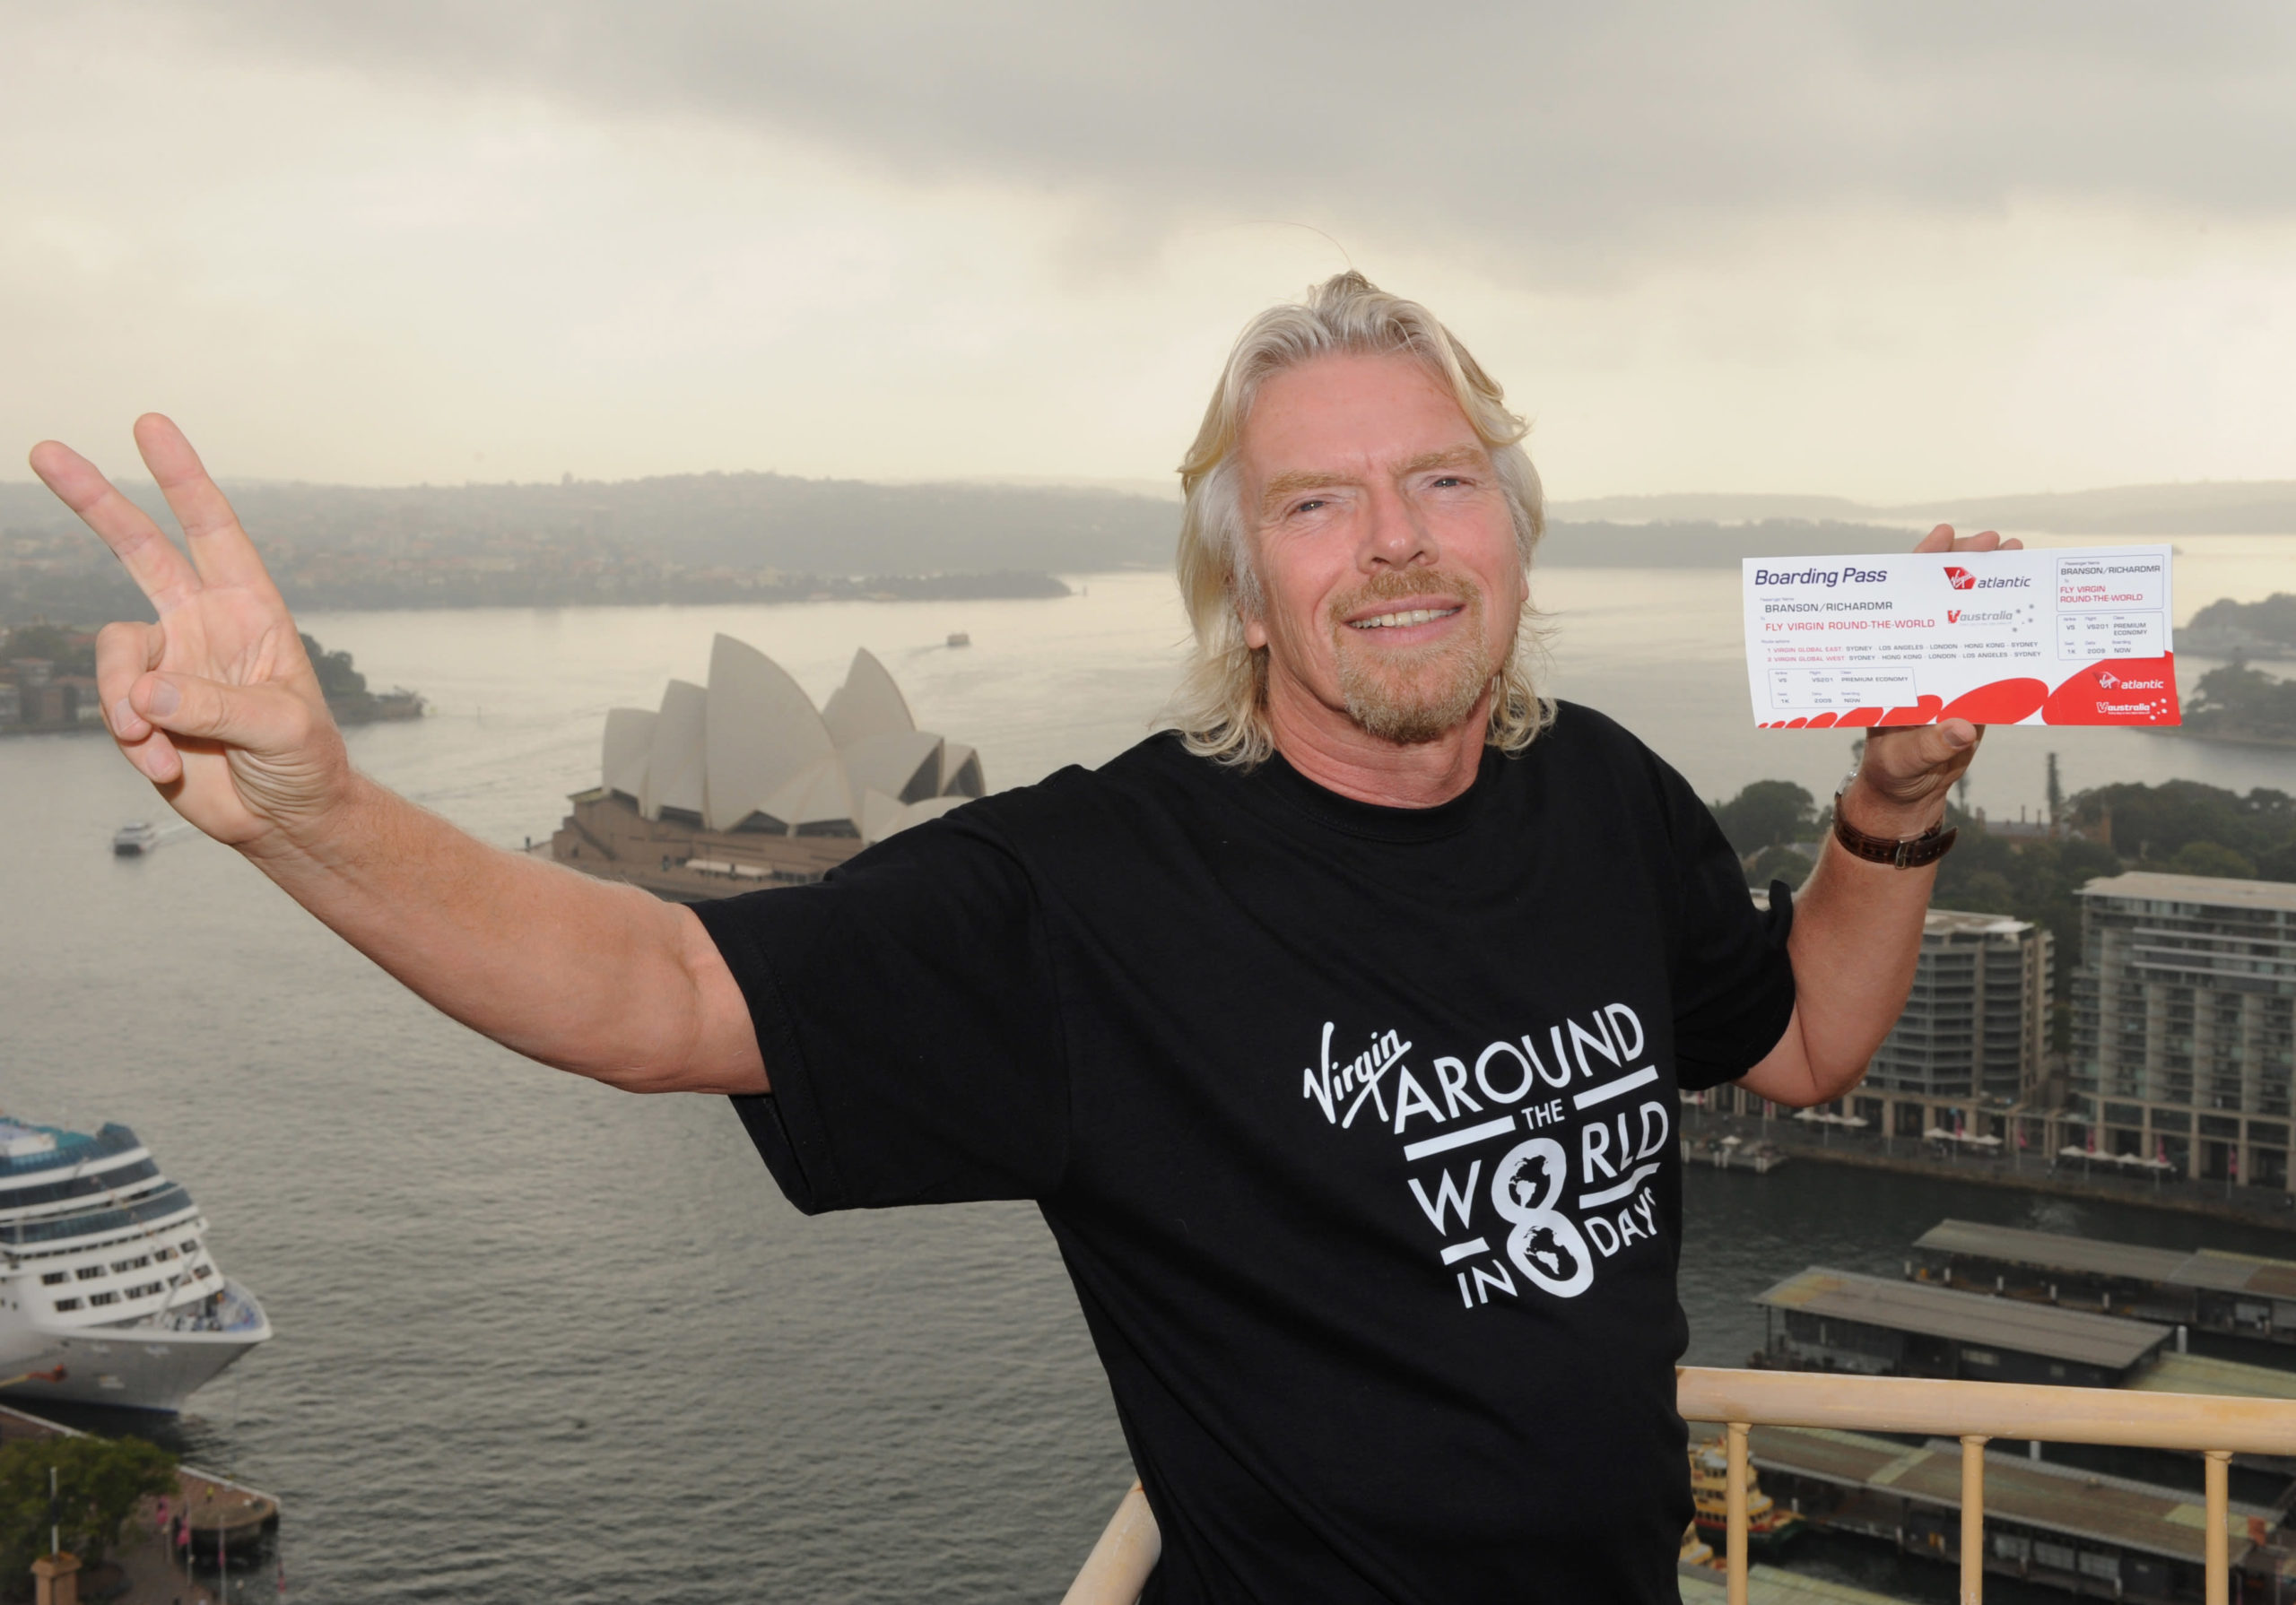 Richard Branson began Virgin Atlantic with a board and $39 flights